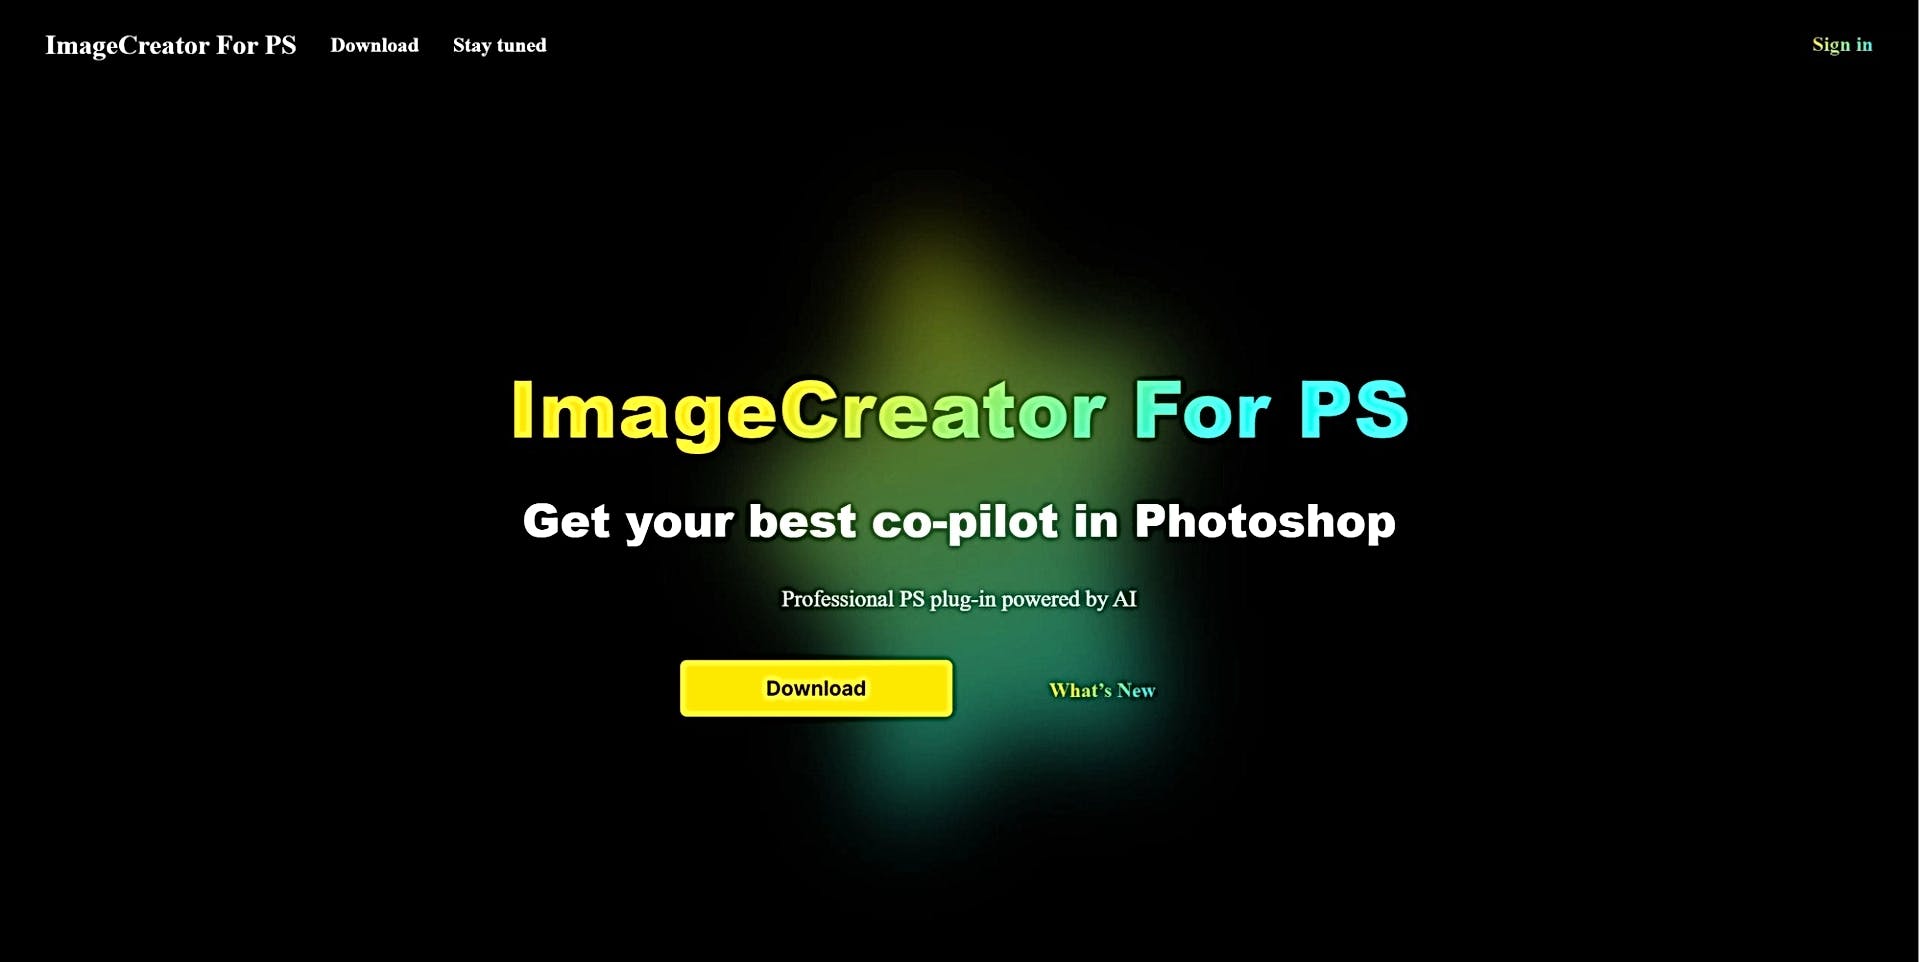 ImageCreator featured